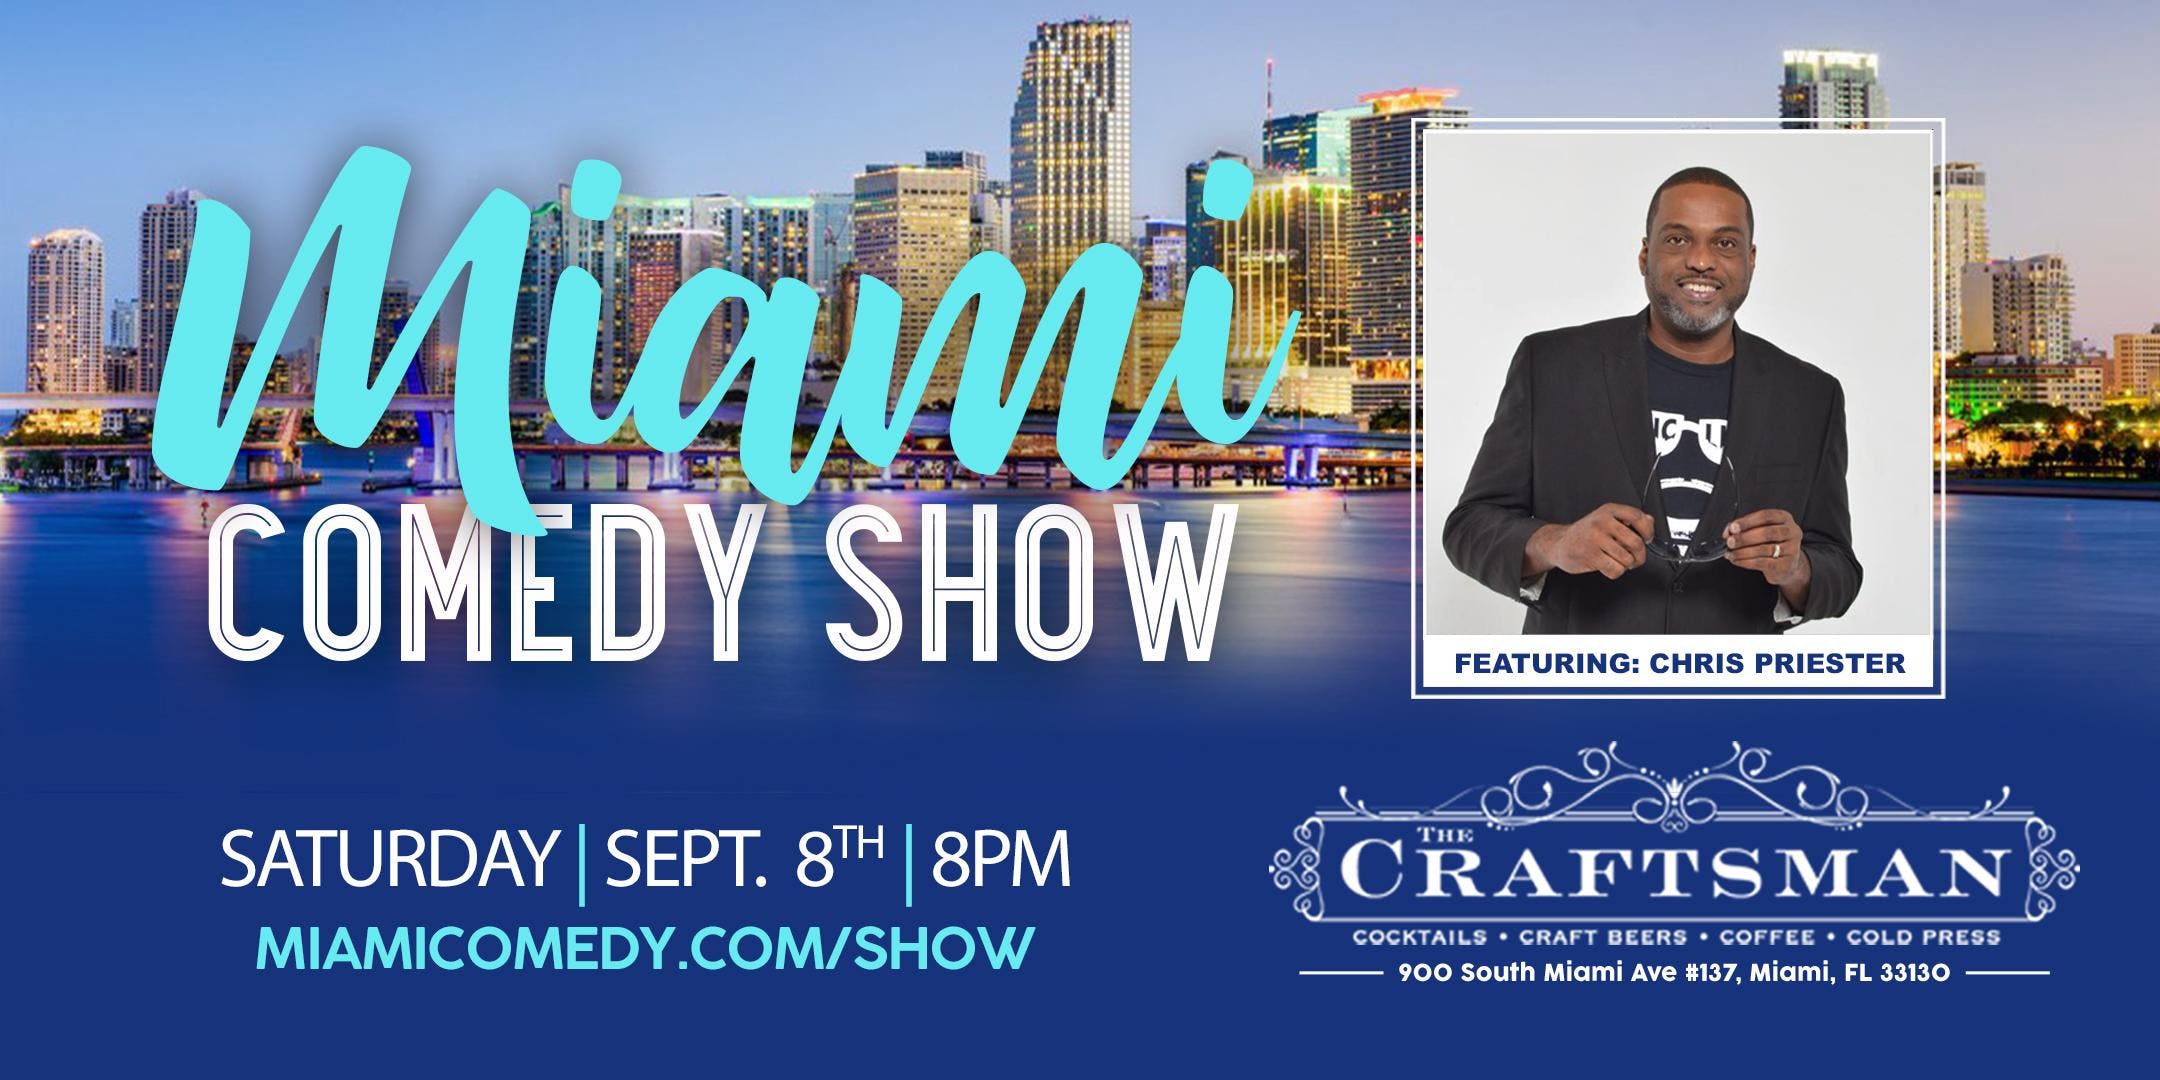 Miami Comedy Show with Chris Priester